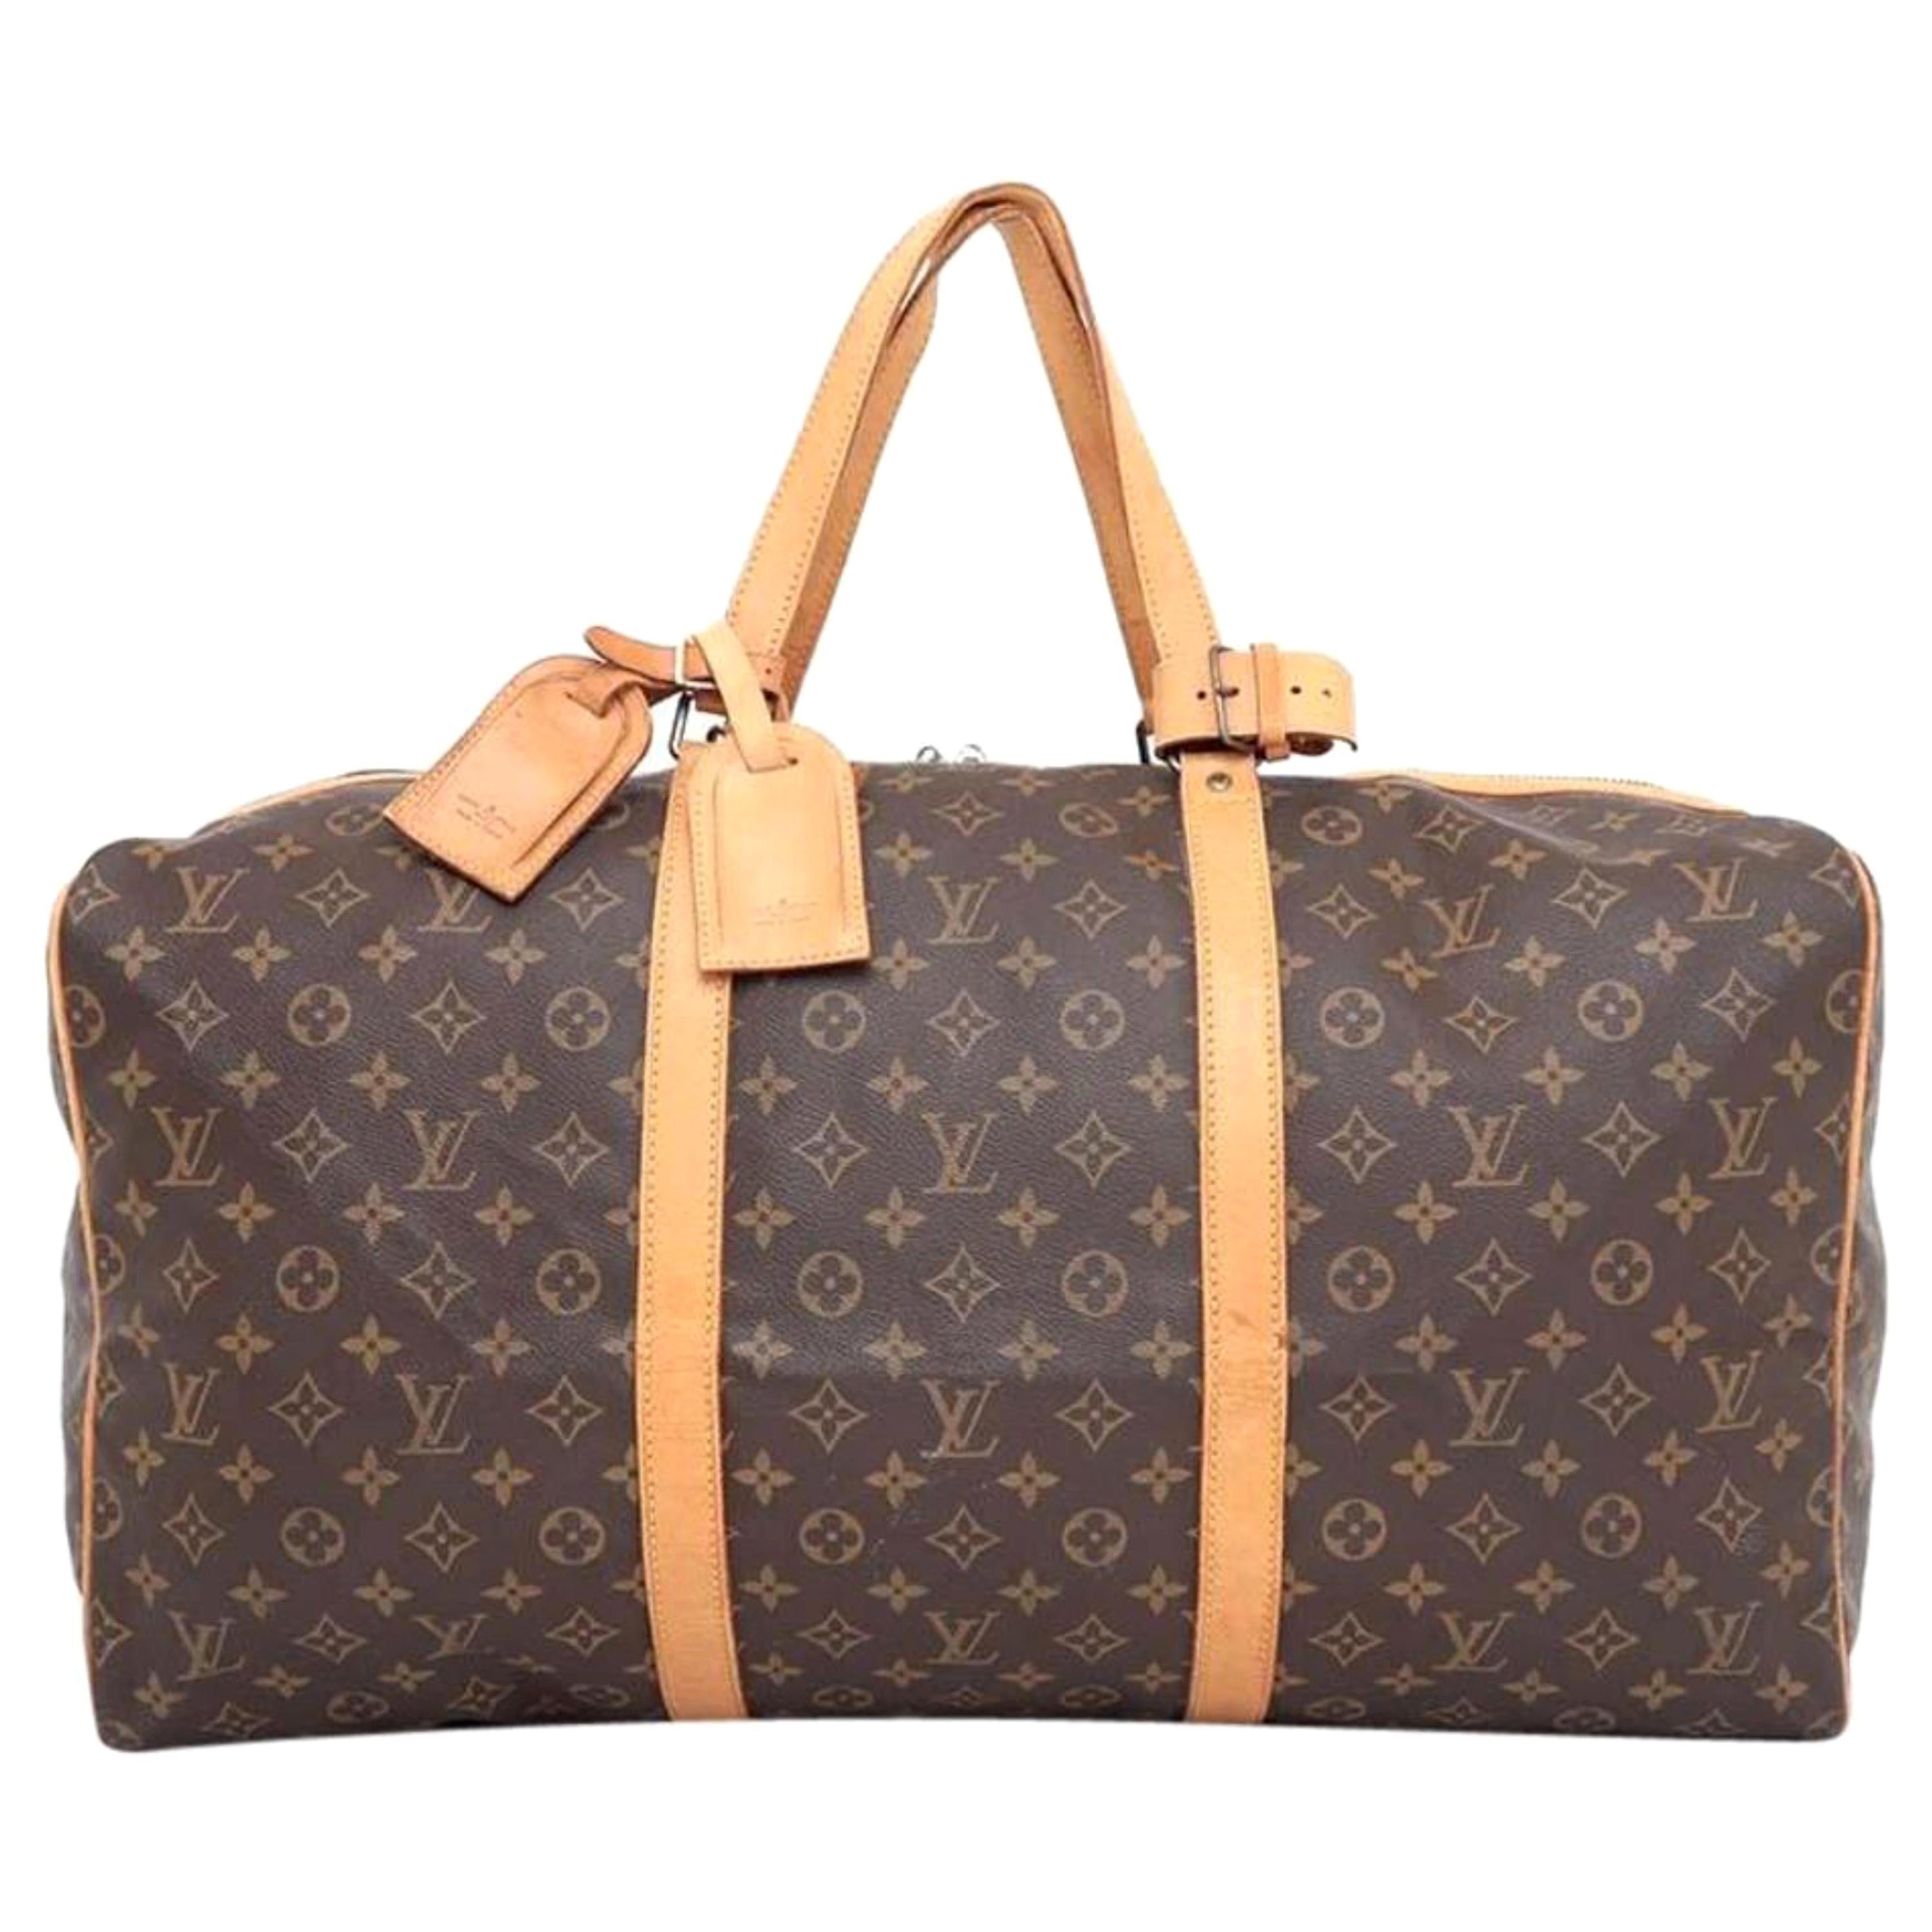 Louis Vuitton Sac Souple Monogram 55 230343 Coated Canvas Weekend/Travel Bag For Sale